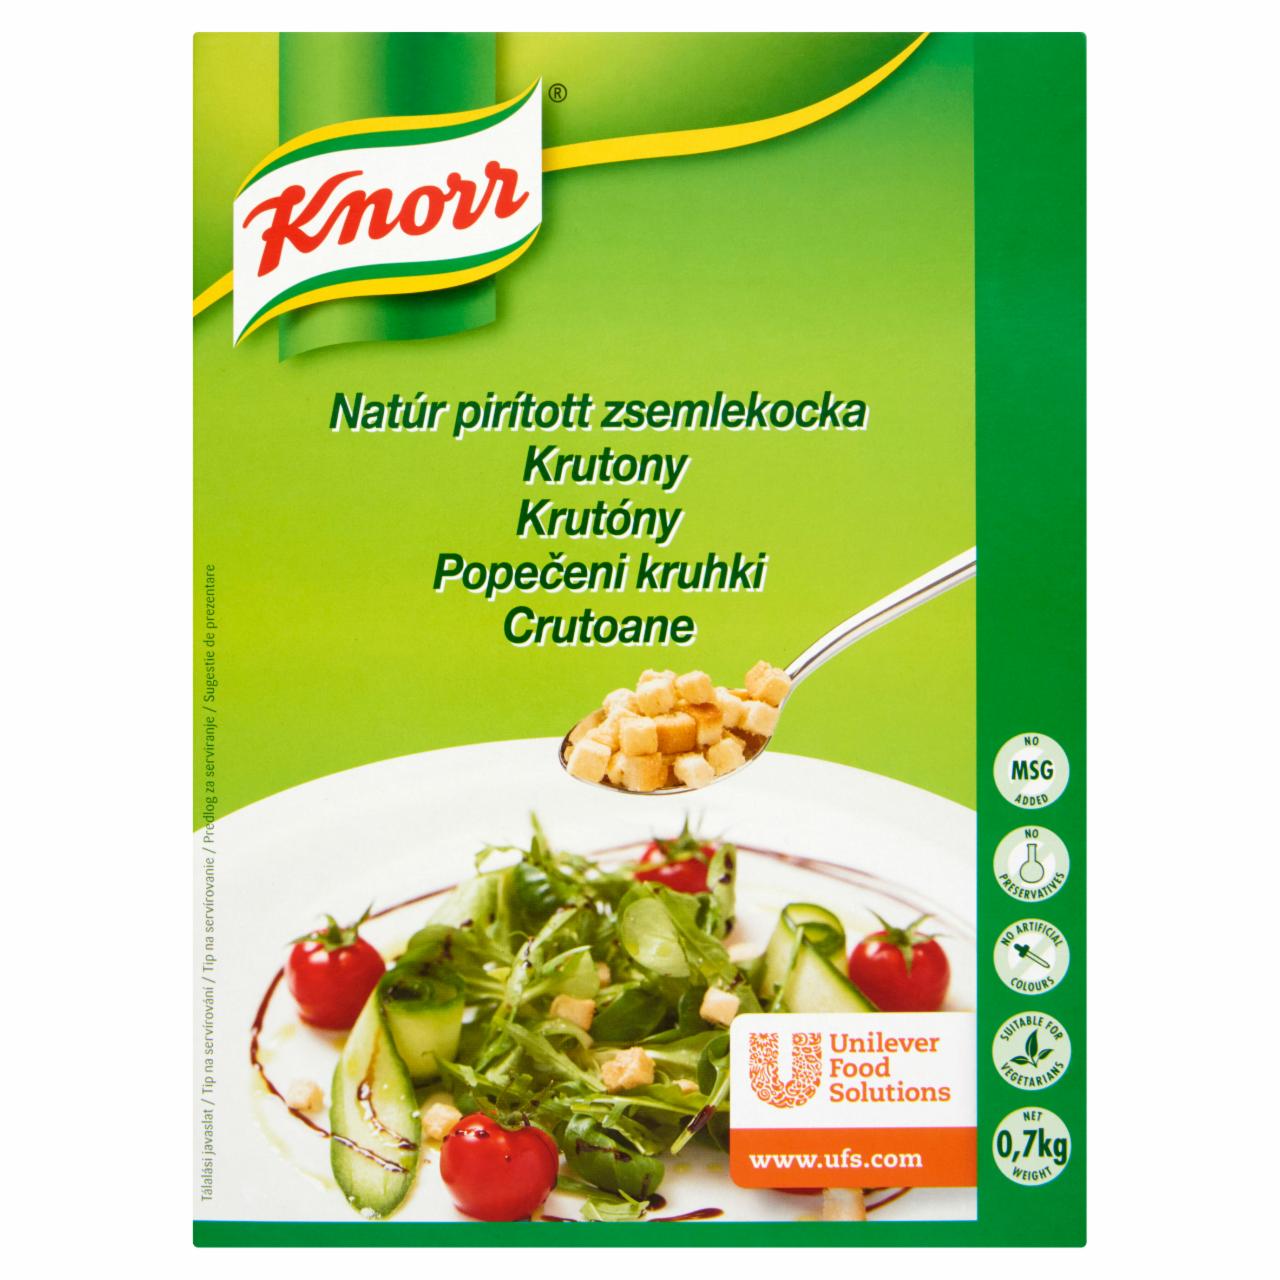 Képek - Knorr natúr pirított zsemlekocka 700 g